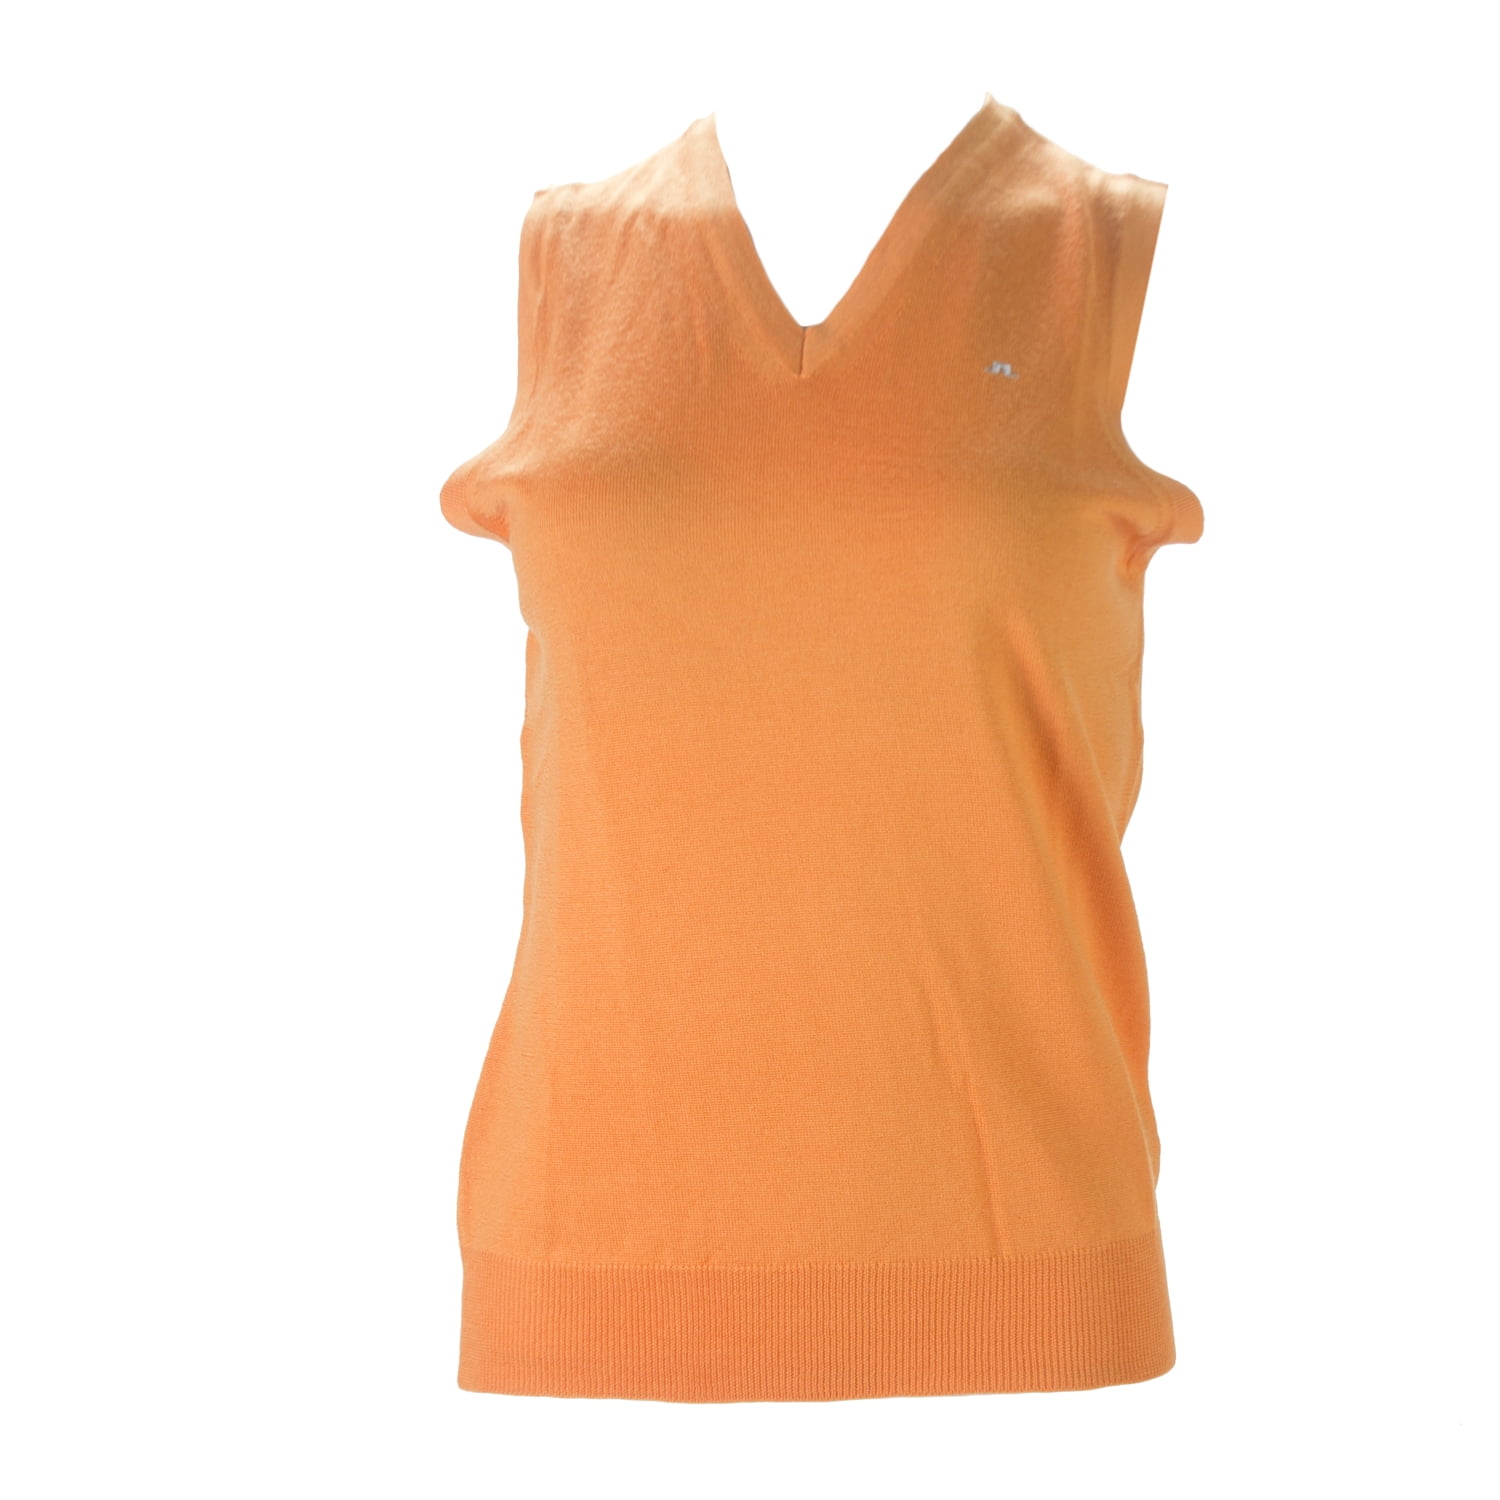 J. LINDEBERG Women's Aya Merino Knit Sweater Vest, Orange, X-Small -  Walmart.com